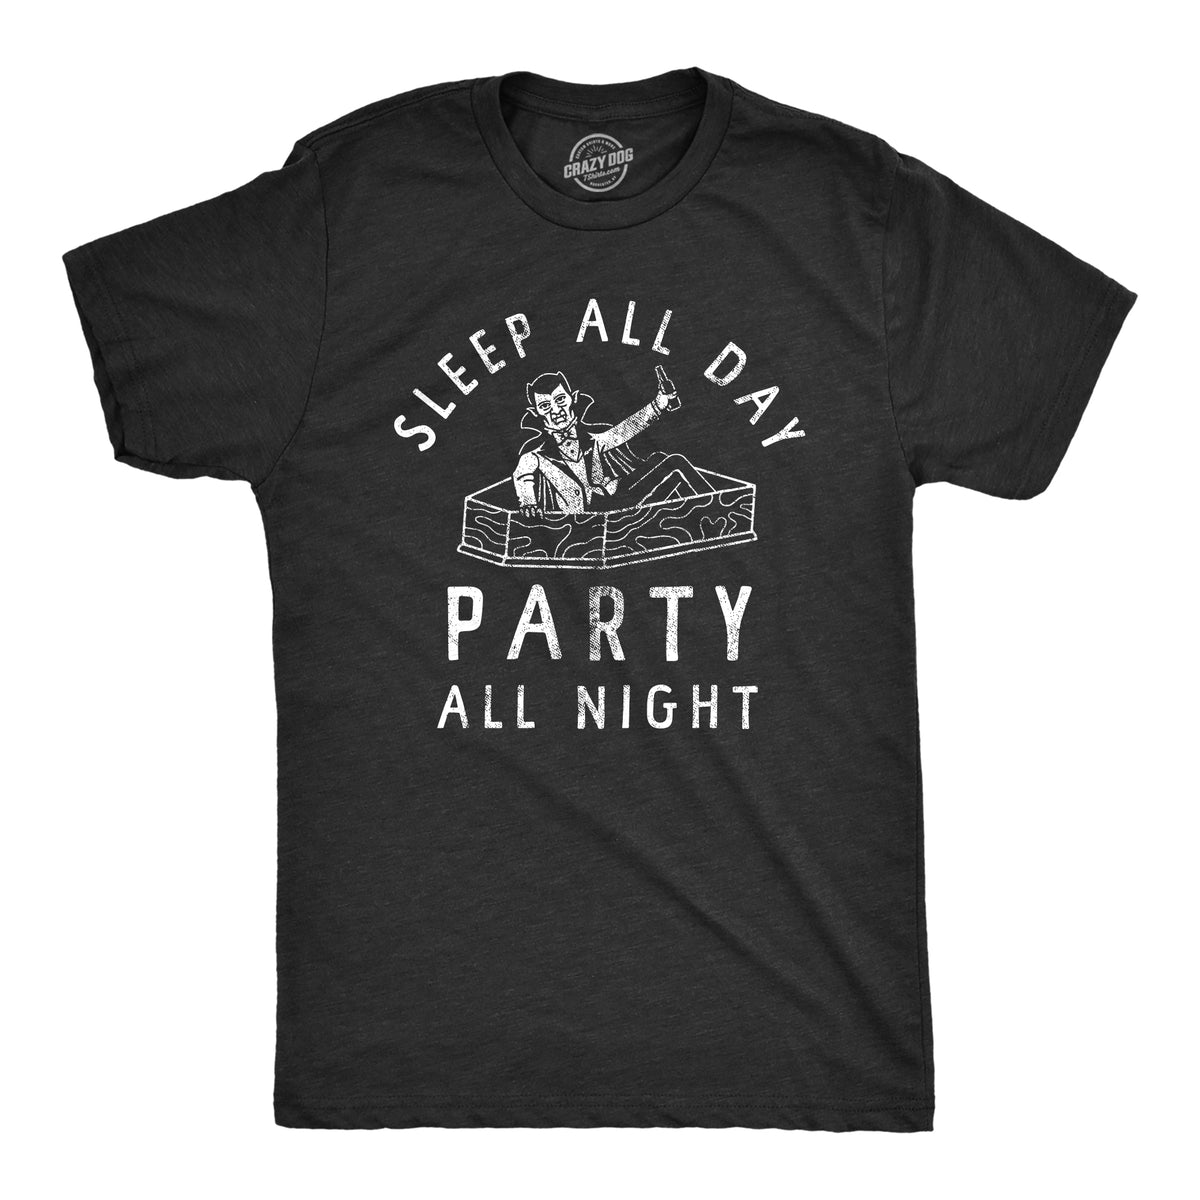 Funny Heather Black - SLEEP Sleep All Day Party All Night Mens T Shirt Nerdy Halloween Drinking Tee